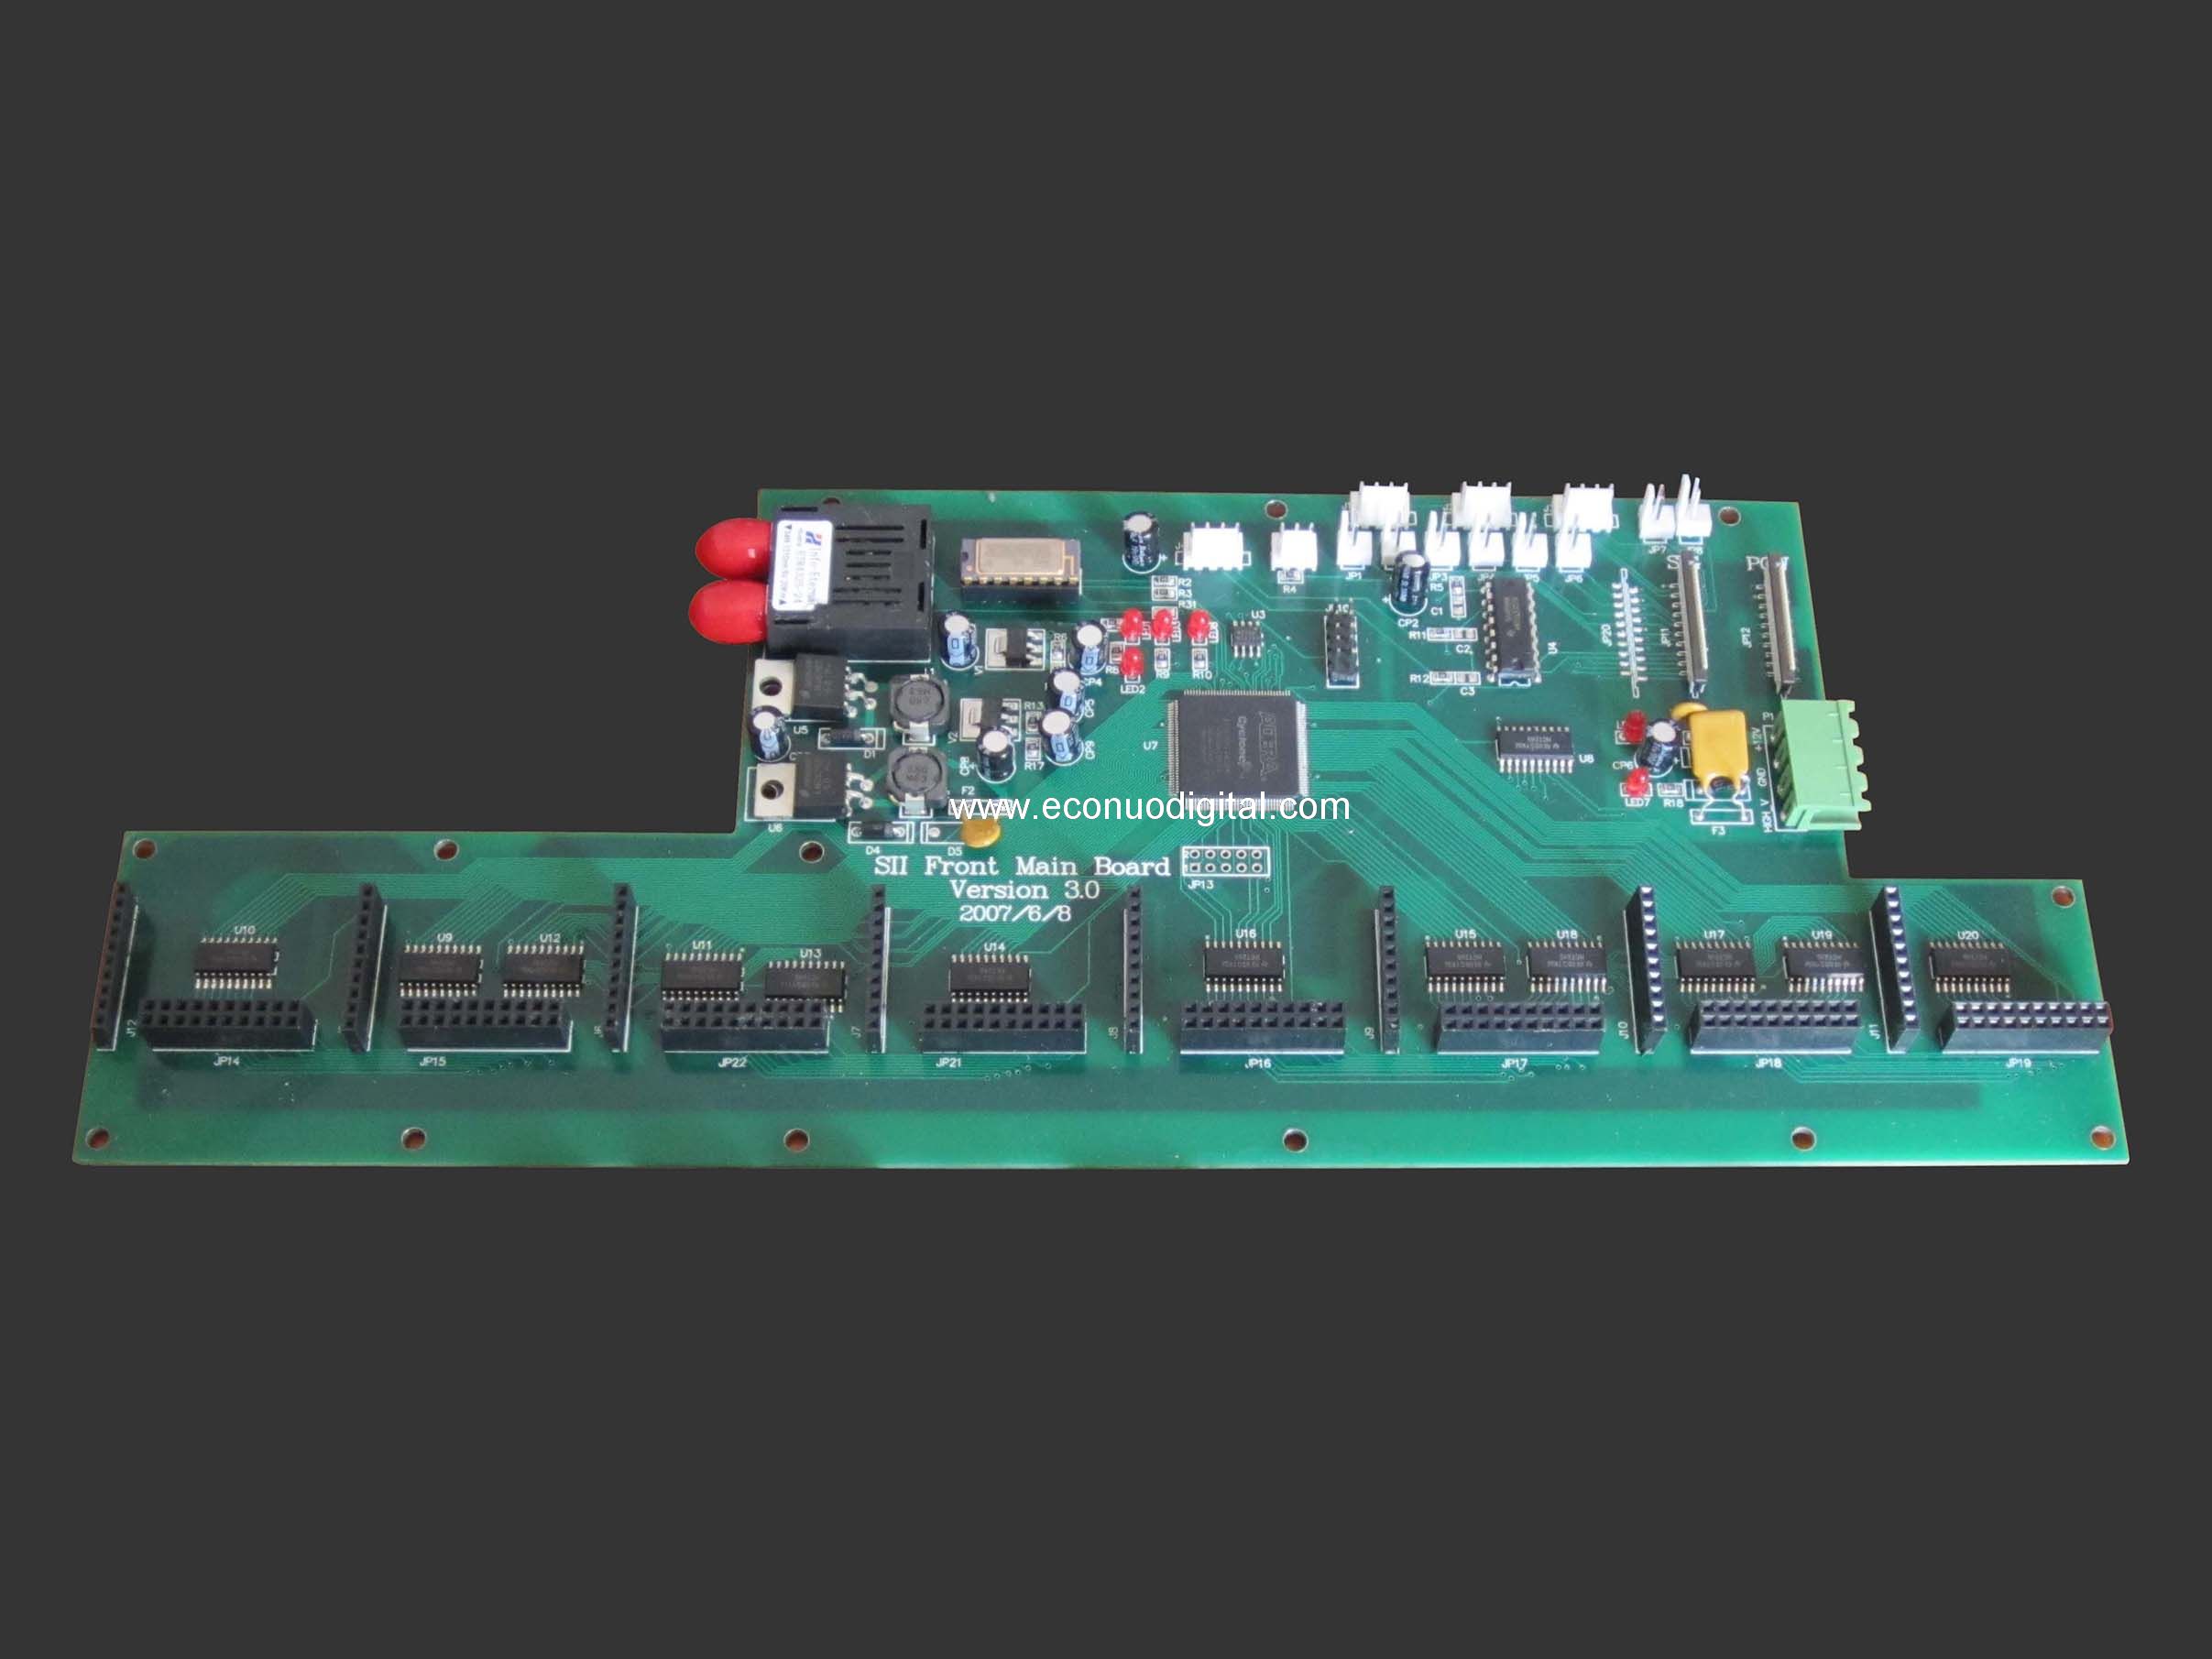  EI2084 Seiko prinhtead board for 8 heads (PCI system)